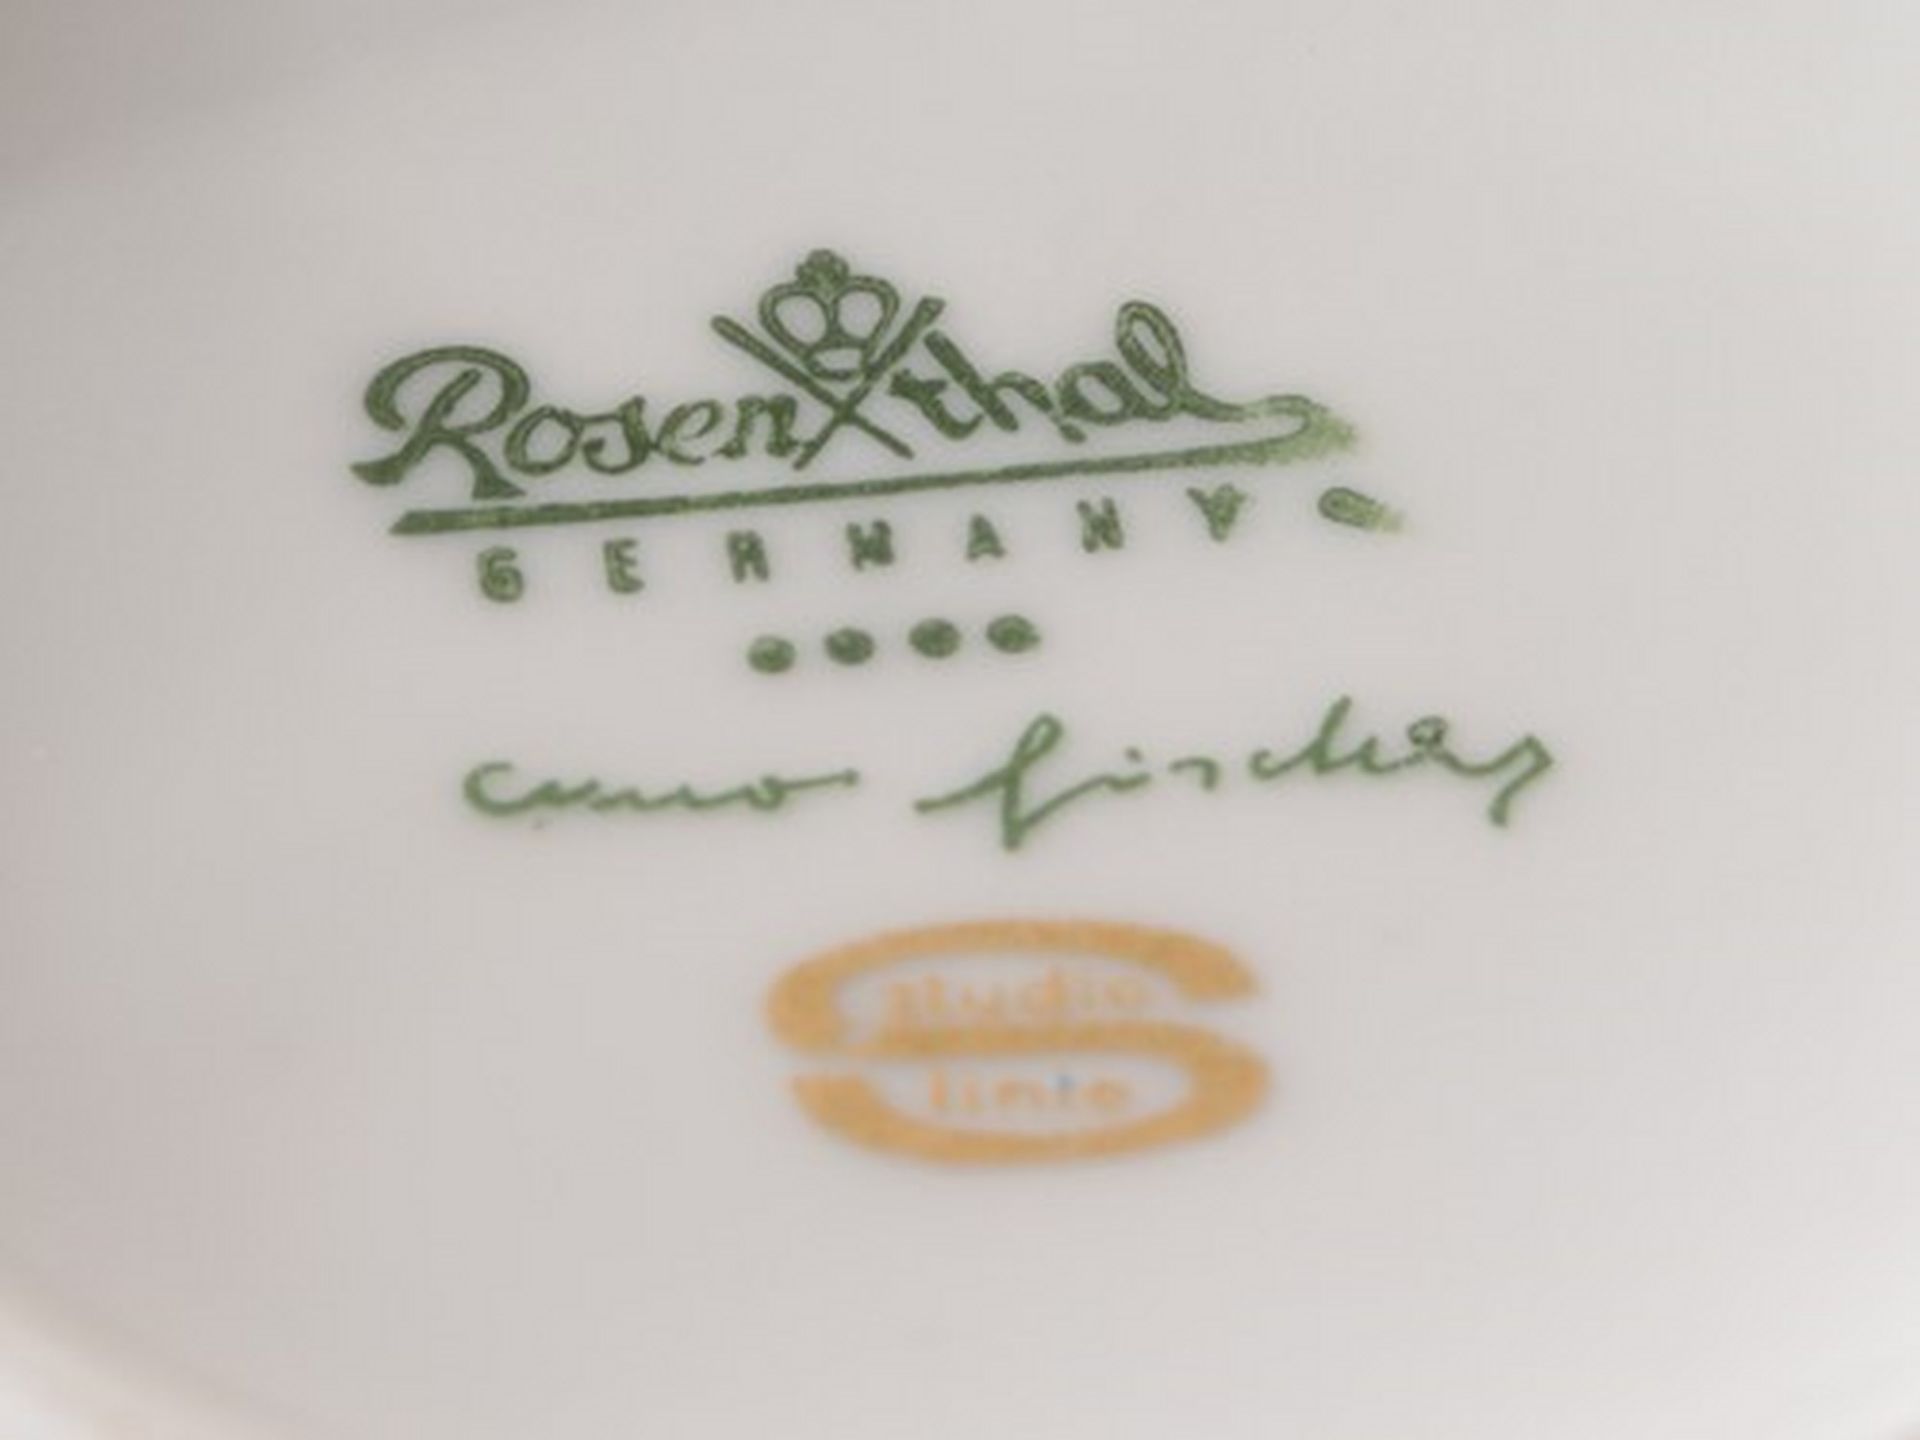 Rosenthal - Vasen grüne Stempelmarke, studio-line, 2 St. bestehend aus: 1x "Porcelaine Noire", - Image 5 of 5